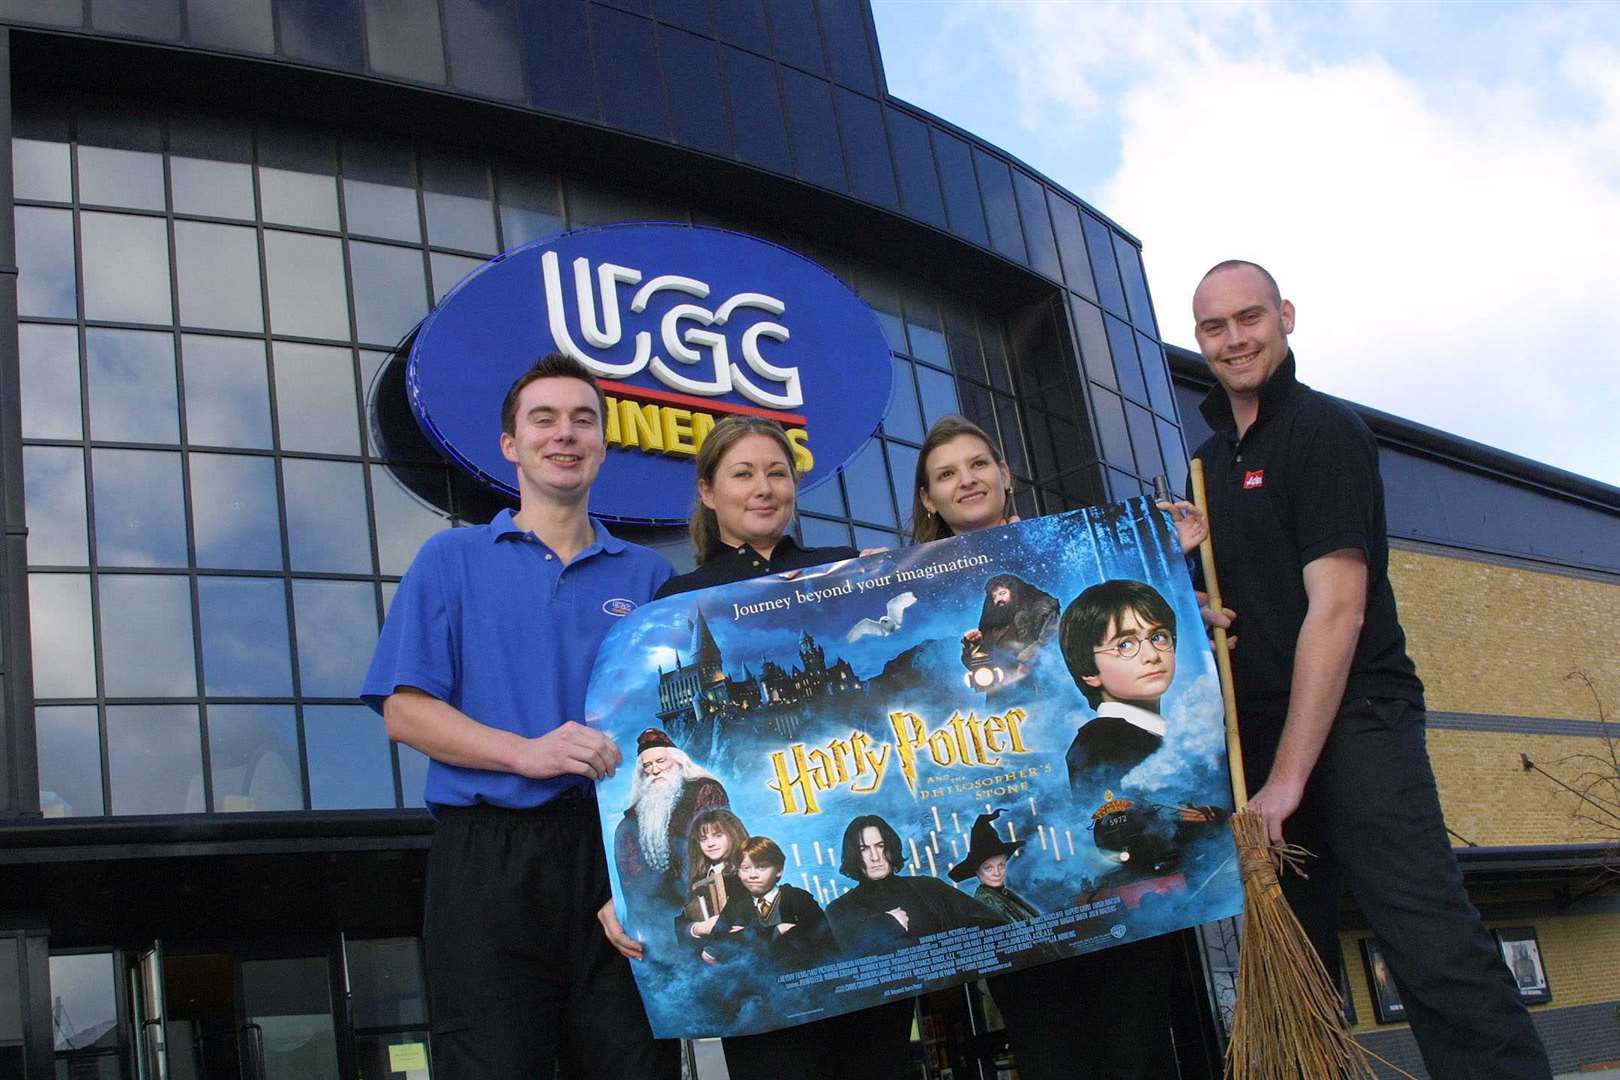 Staff at UGC Cinema in Strood